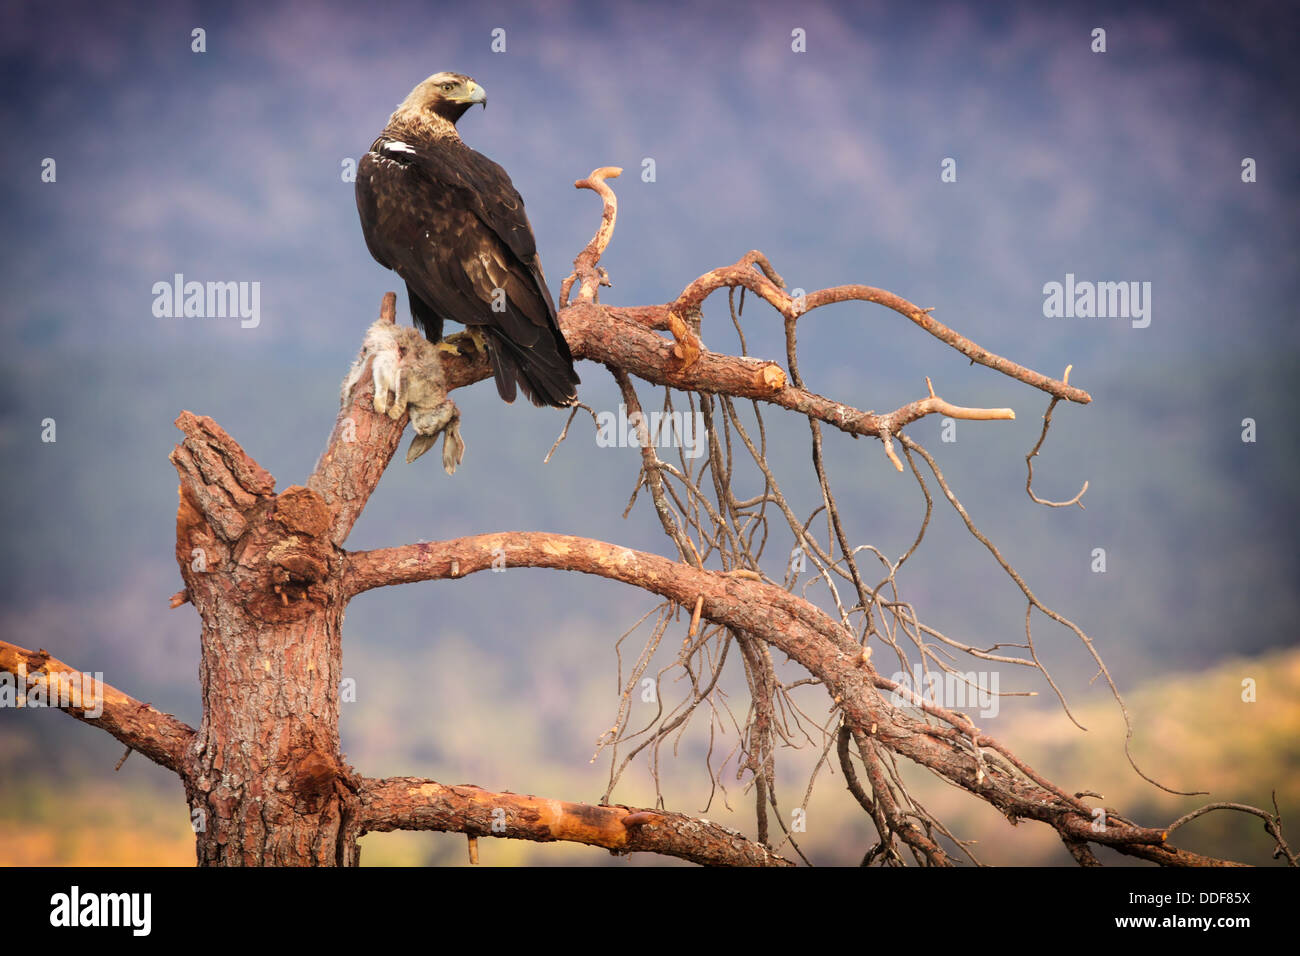 Spanish Imperial Eagle (Aquila adalberti) on tree branch with rabbit prey. Stock Photo